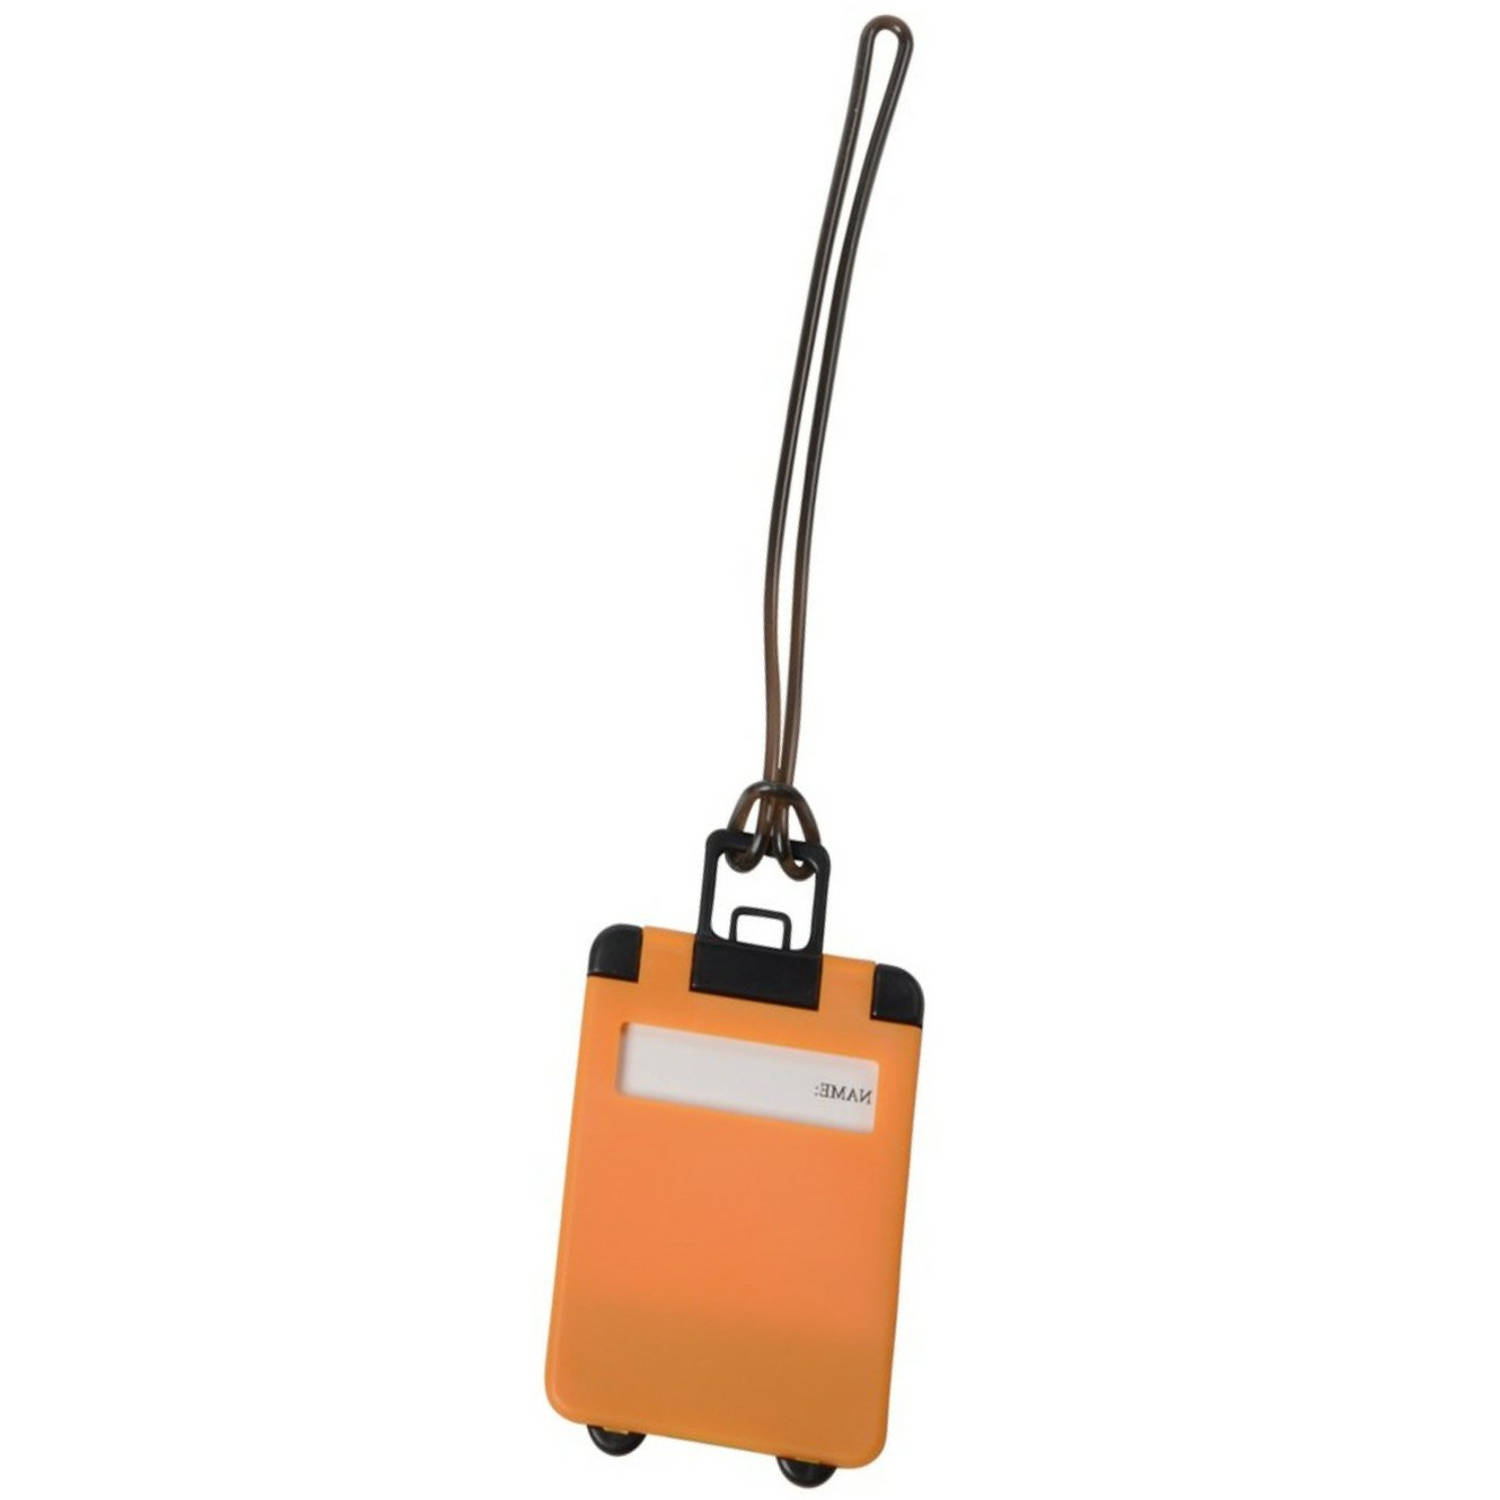 Kofferlabel Wanderlust - oranje - 9 x 5.5 cm - reiskoffer/handbagage label